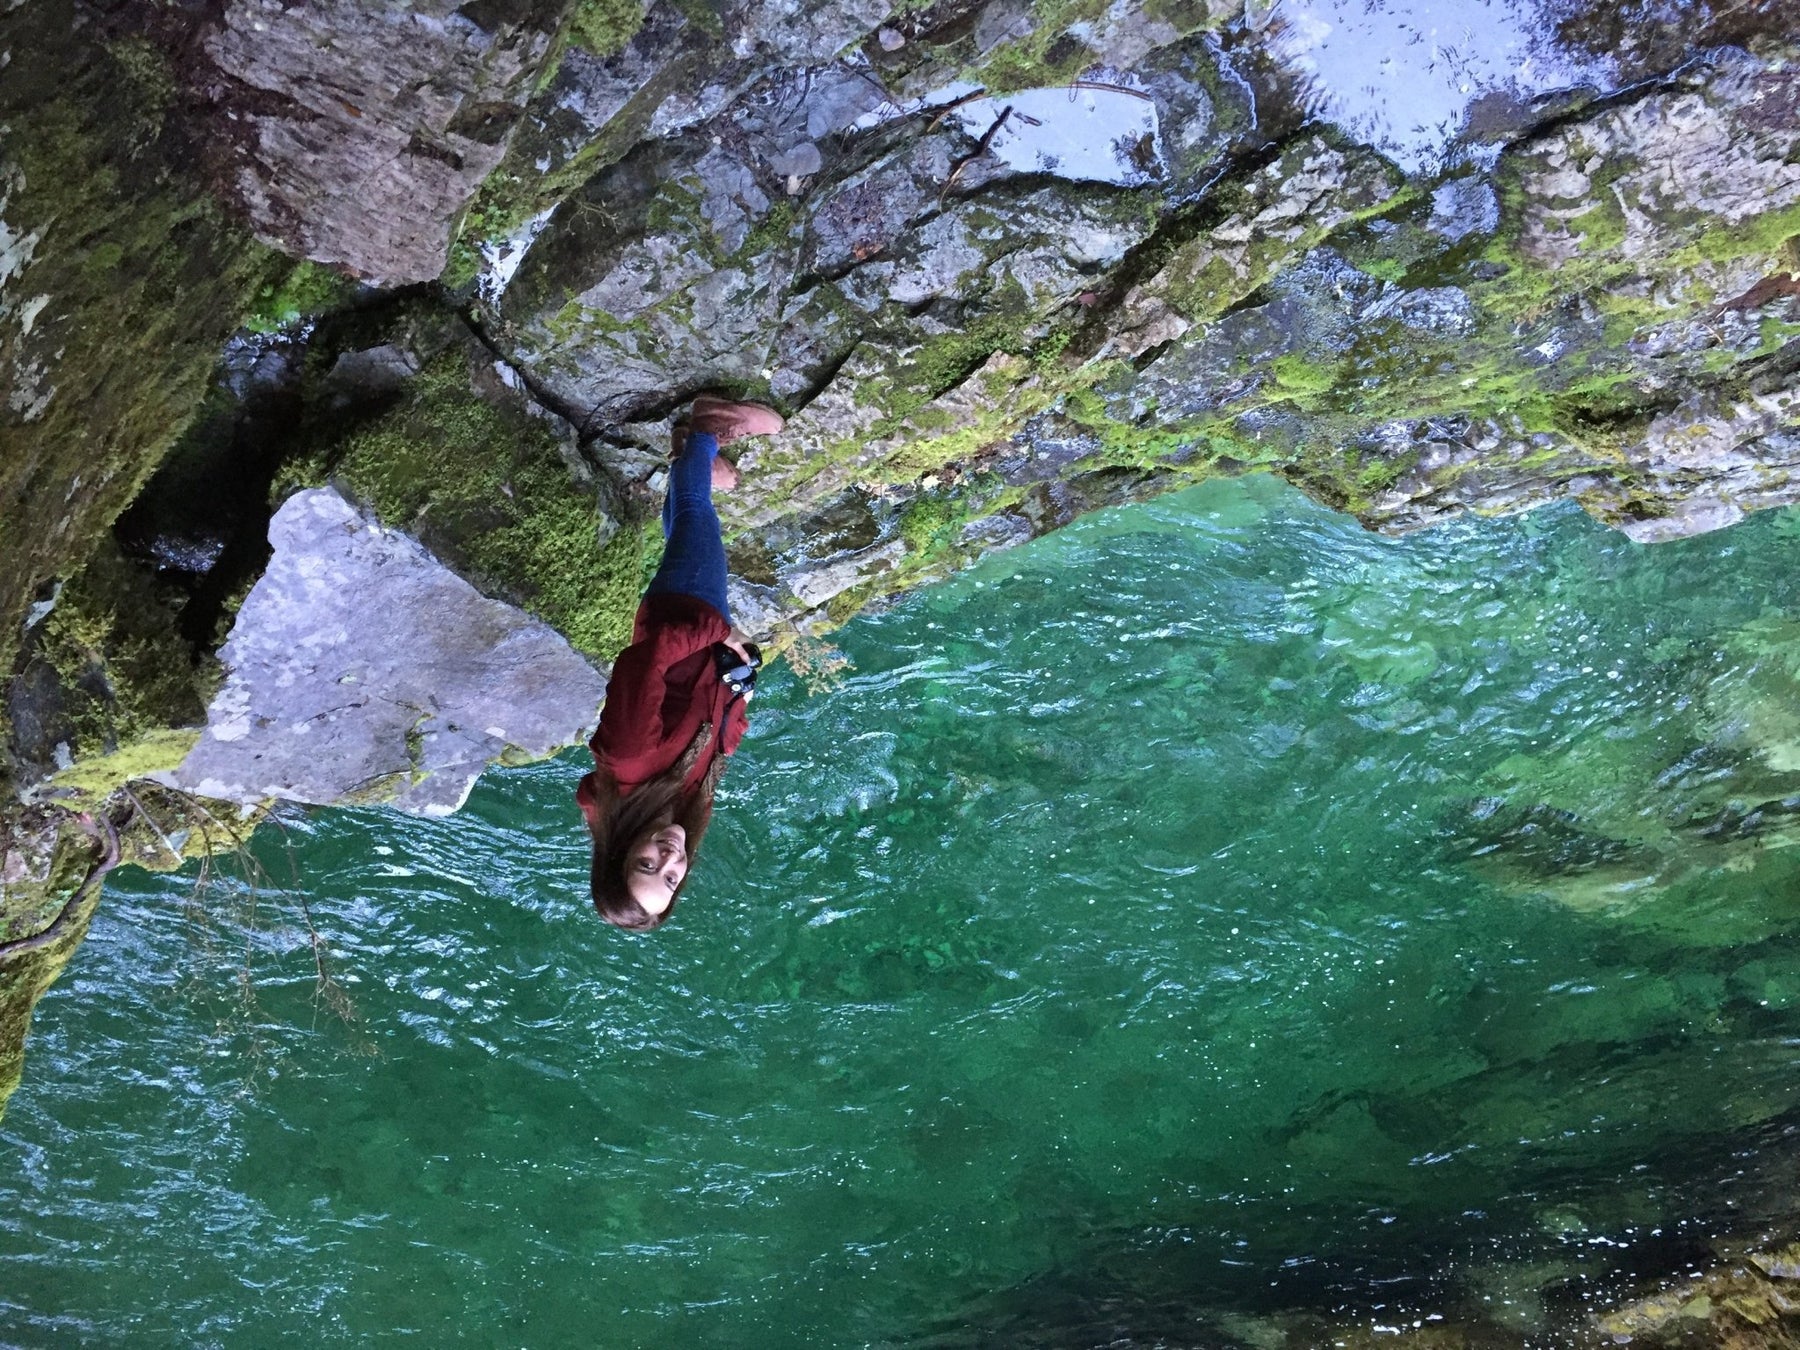 Trip Report: Opal Creek - Next Adventure